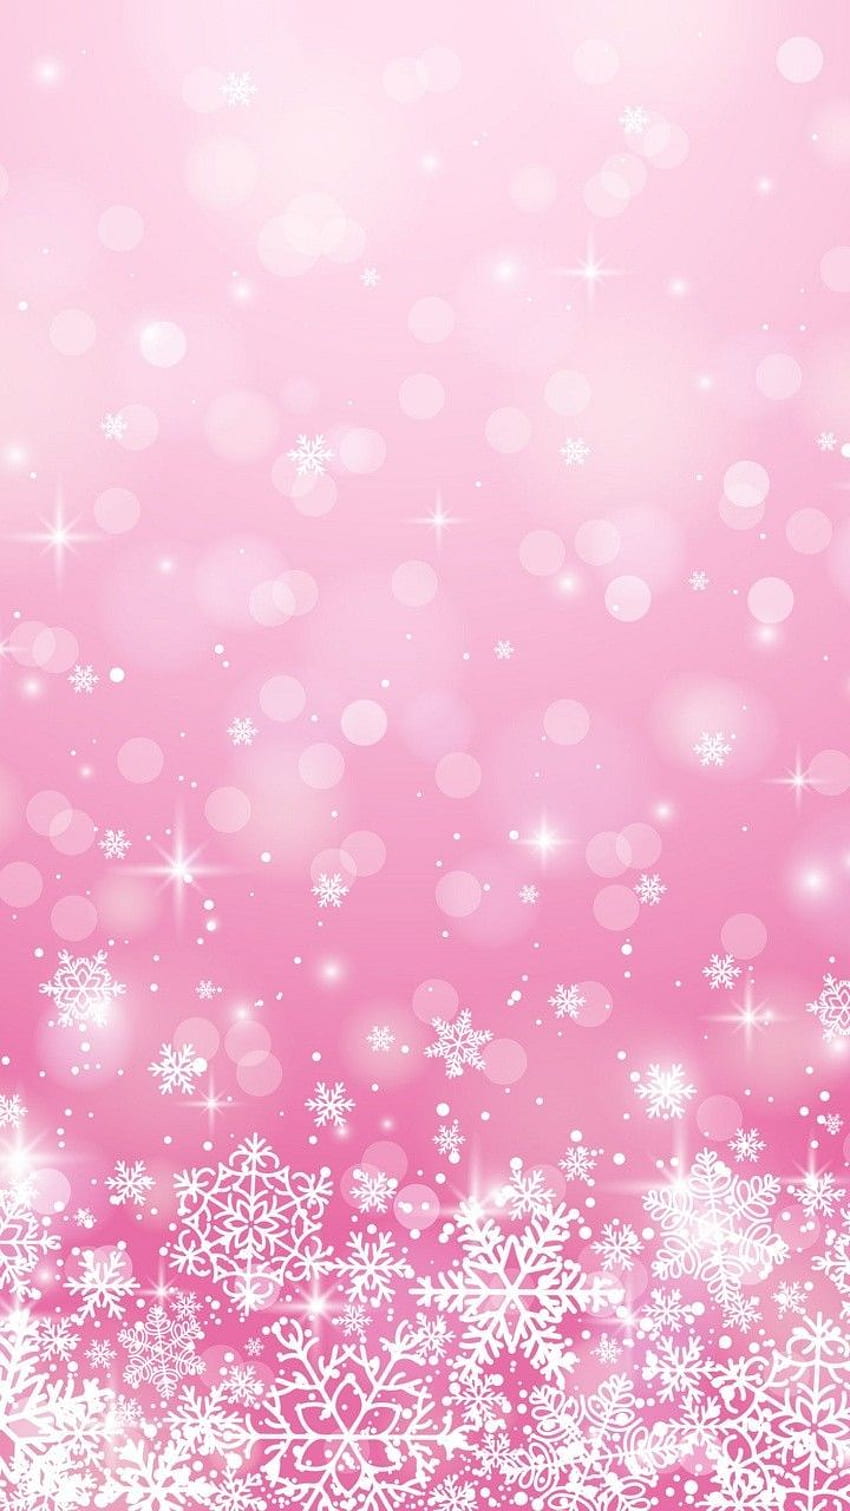 Kepingan Salju Merah Muda -, Latar Belakang Kepingan Salju Merah Muda di Kelelawar, Negeri Ajaib Musim Dingin Merah Muda wallpaper ponsel HD